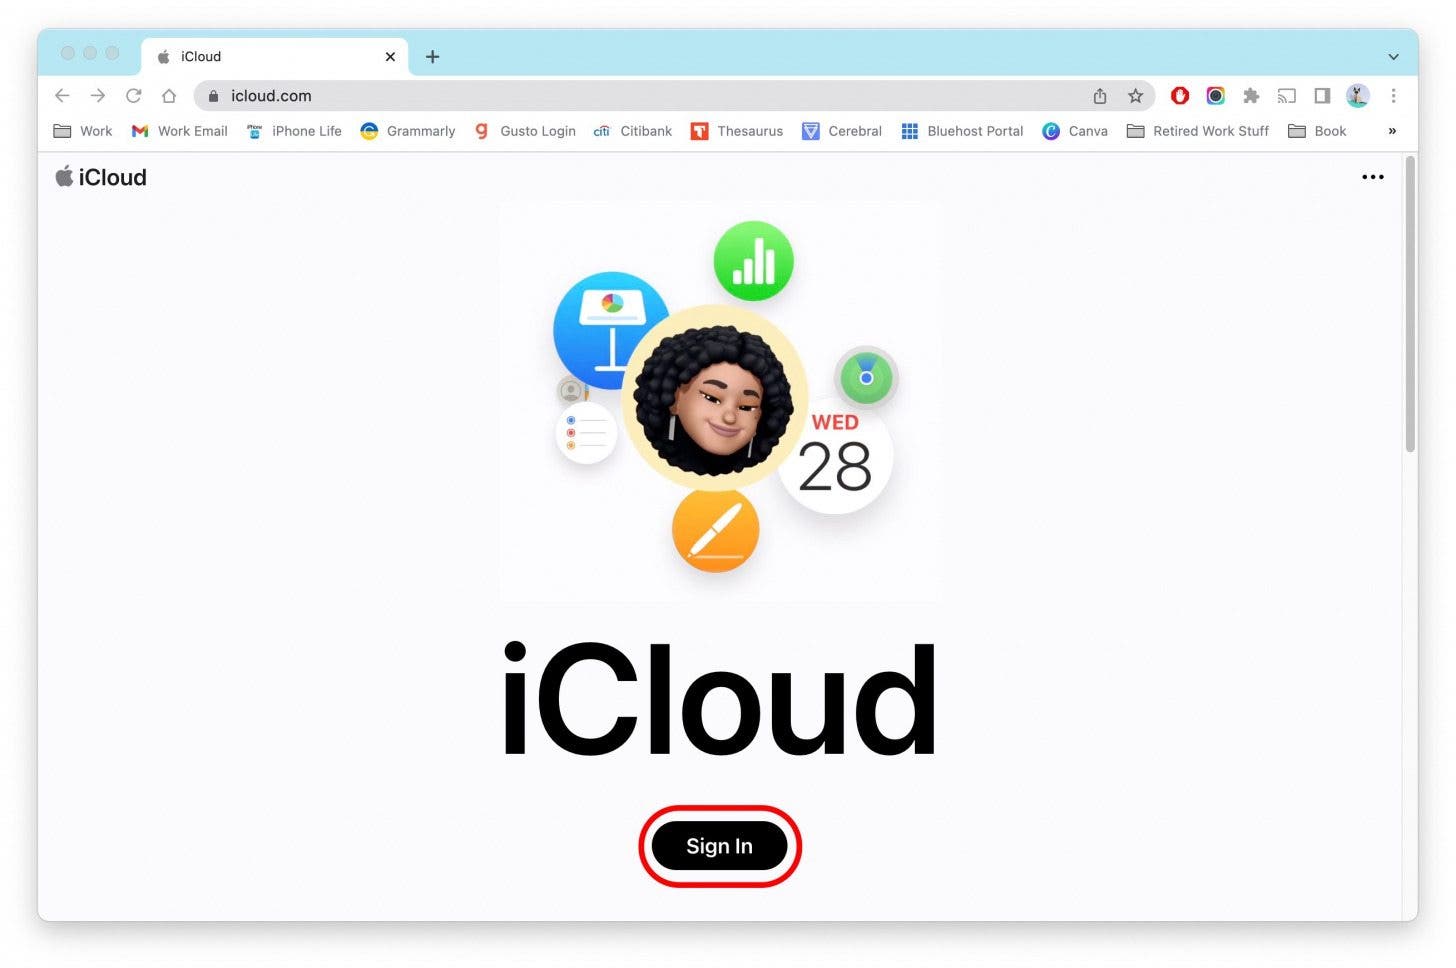 En el dispositivo que elijas, ve a iCloud.com.